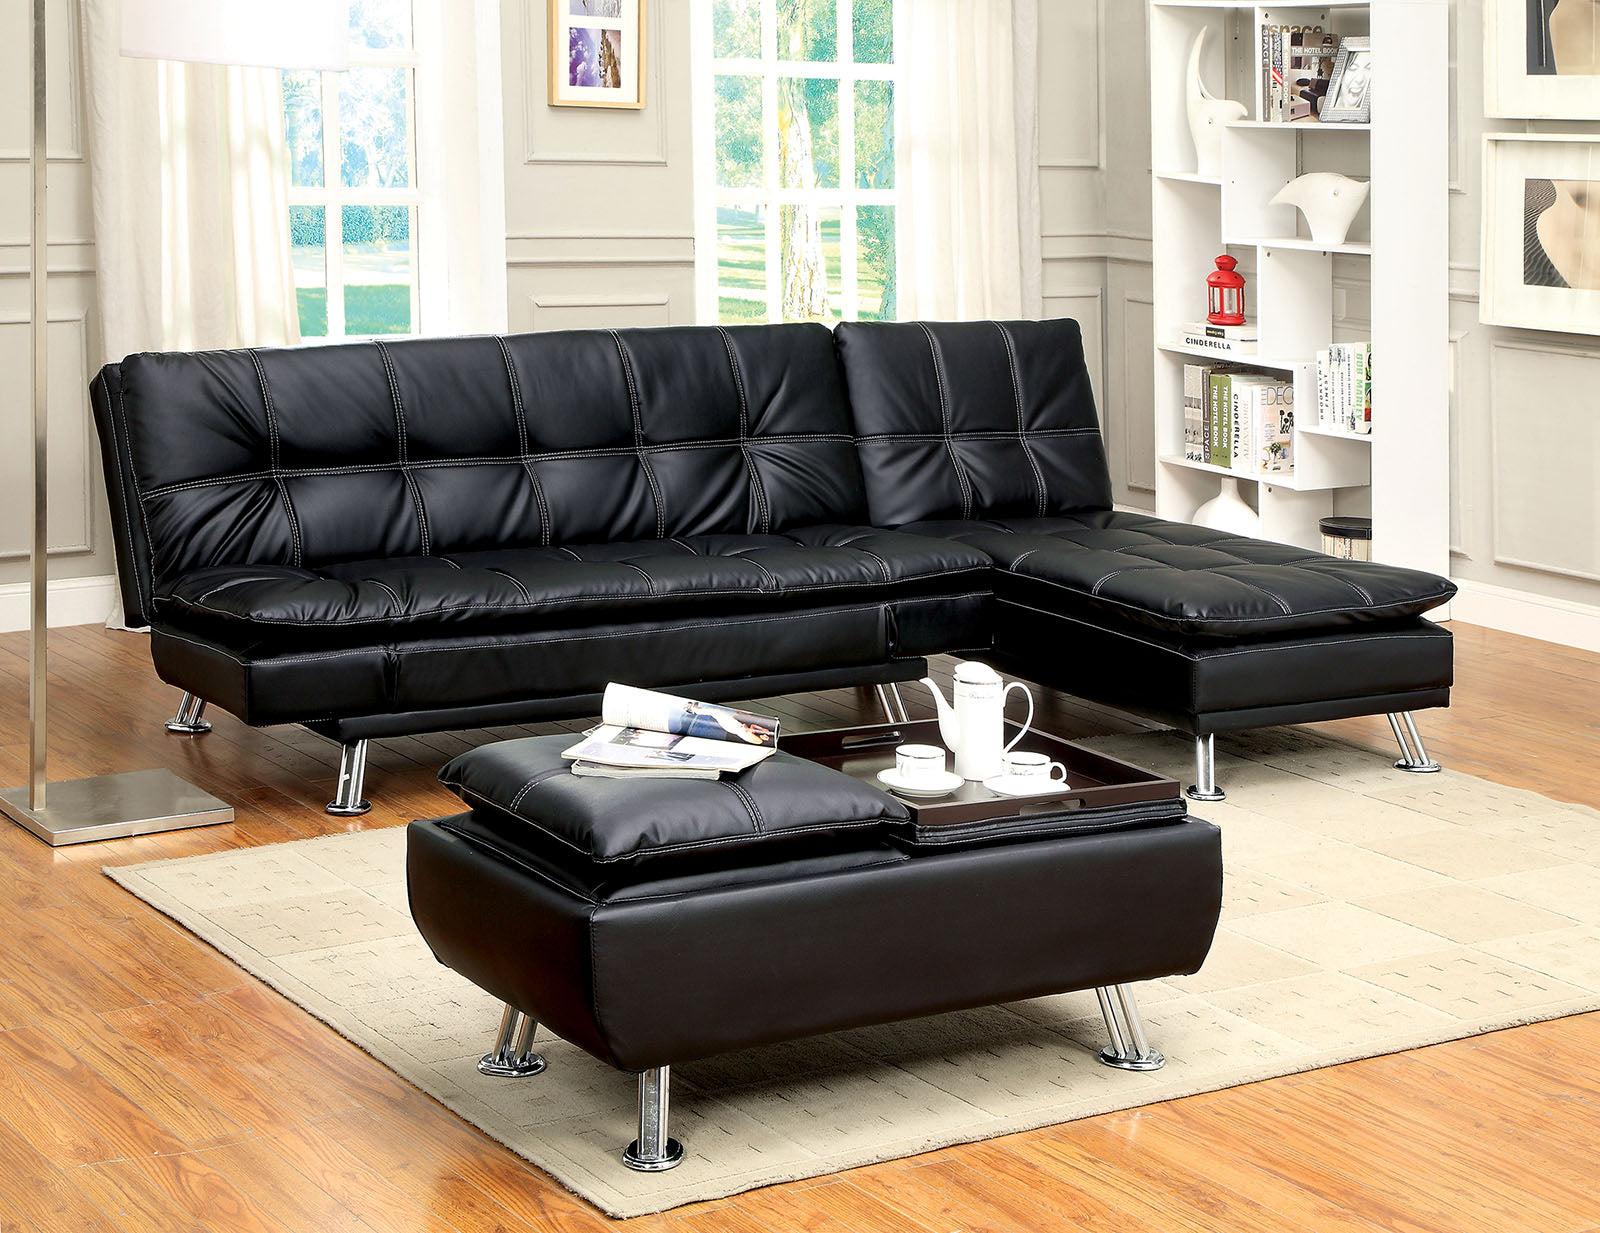 Contemporary Futon Sofa and Chaise CM2677BK-2PC Hauser CM2677BK-2PC in Black Leatherette